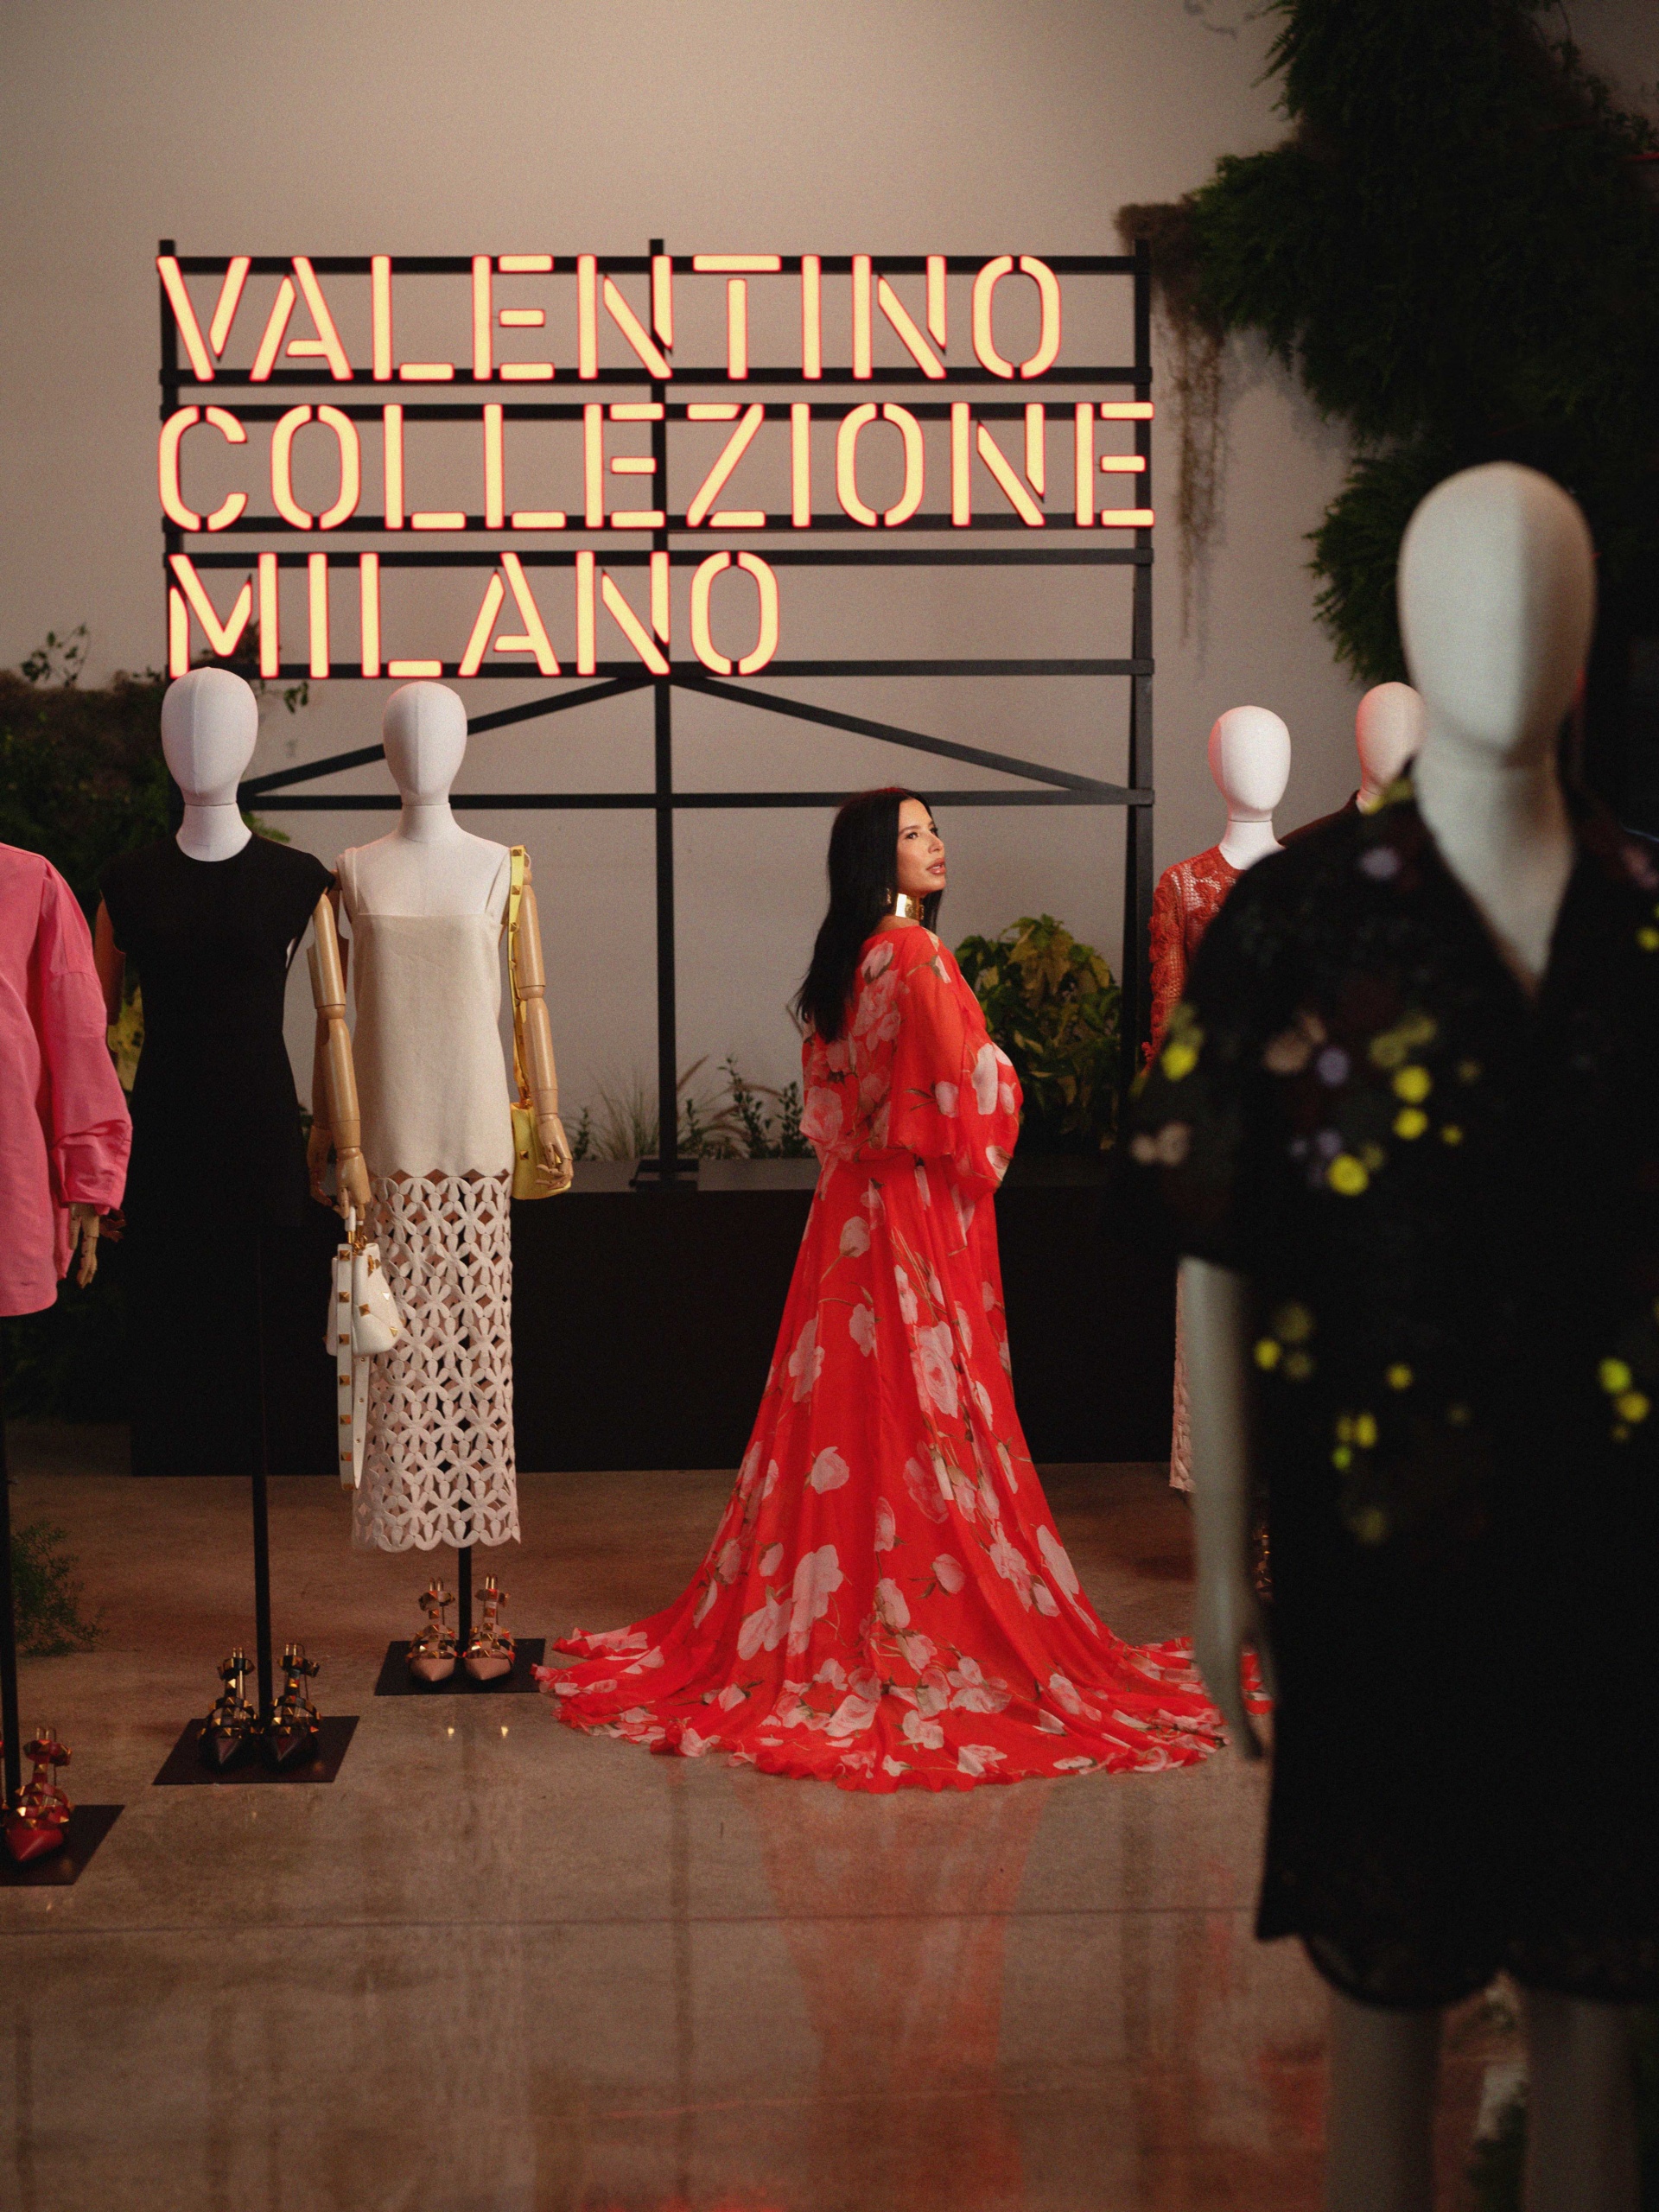 Aureta stands inside Valentino’s installation at the Rubell Museum. All clothing from Valentino Collezione Milano and Valentino Garavani accessories.